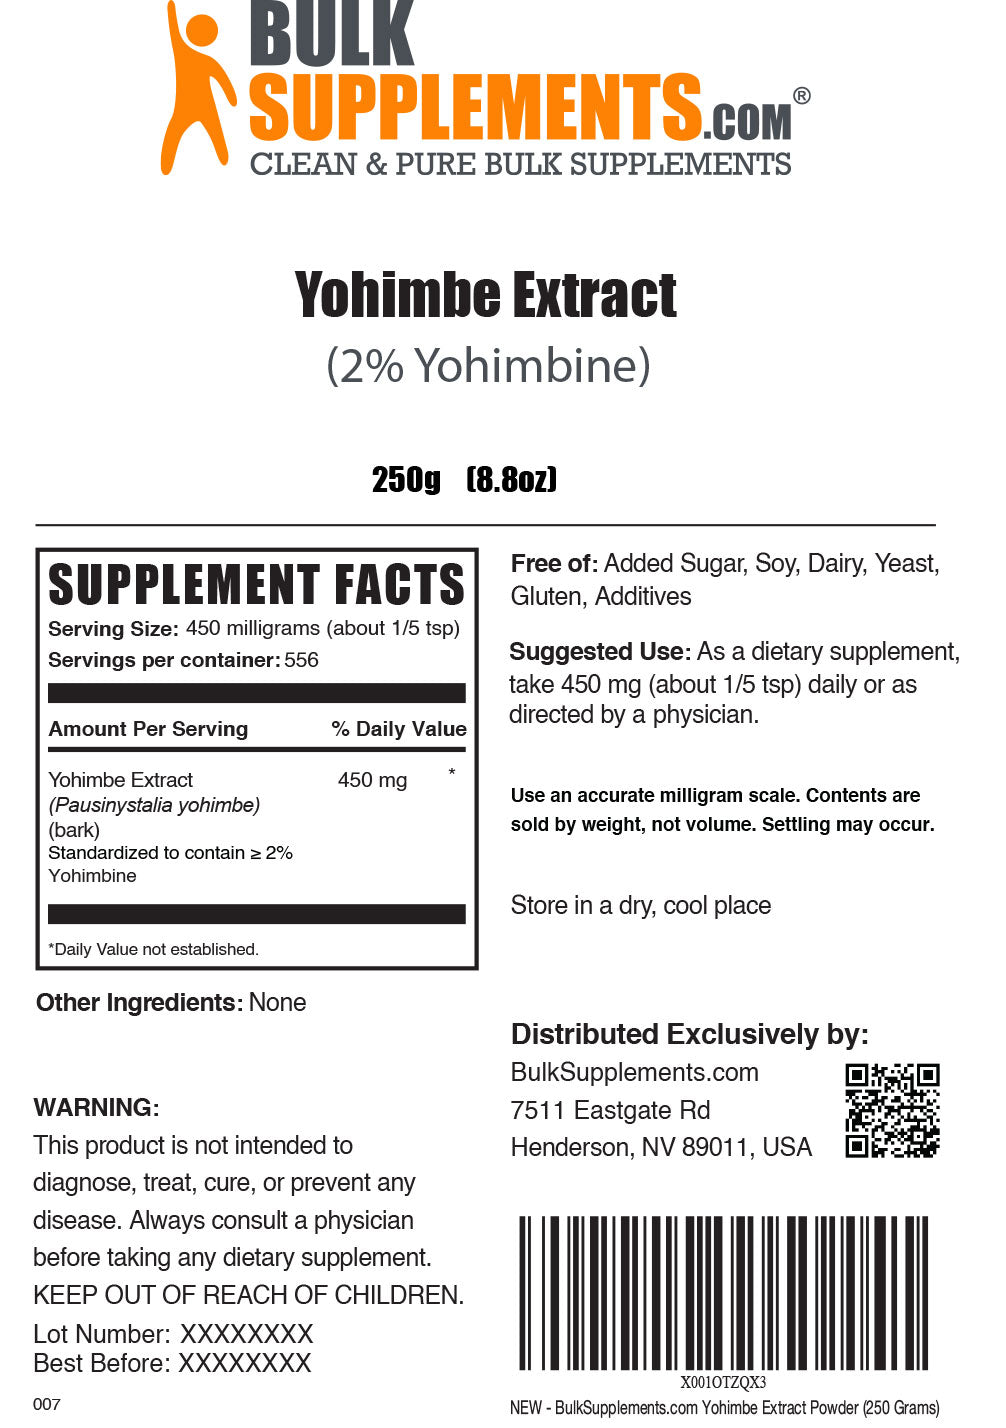 Yohimbe Extract powder label 250g